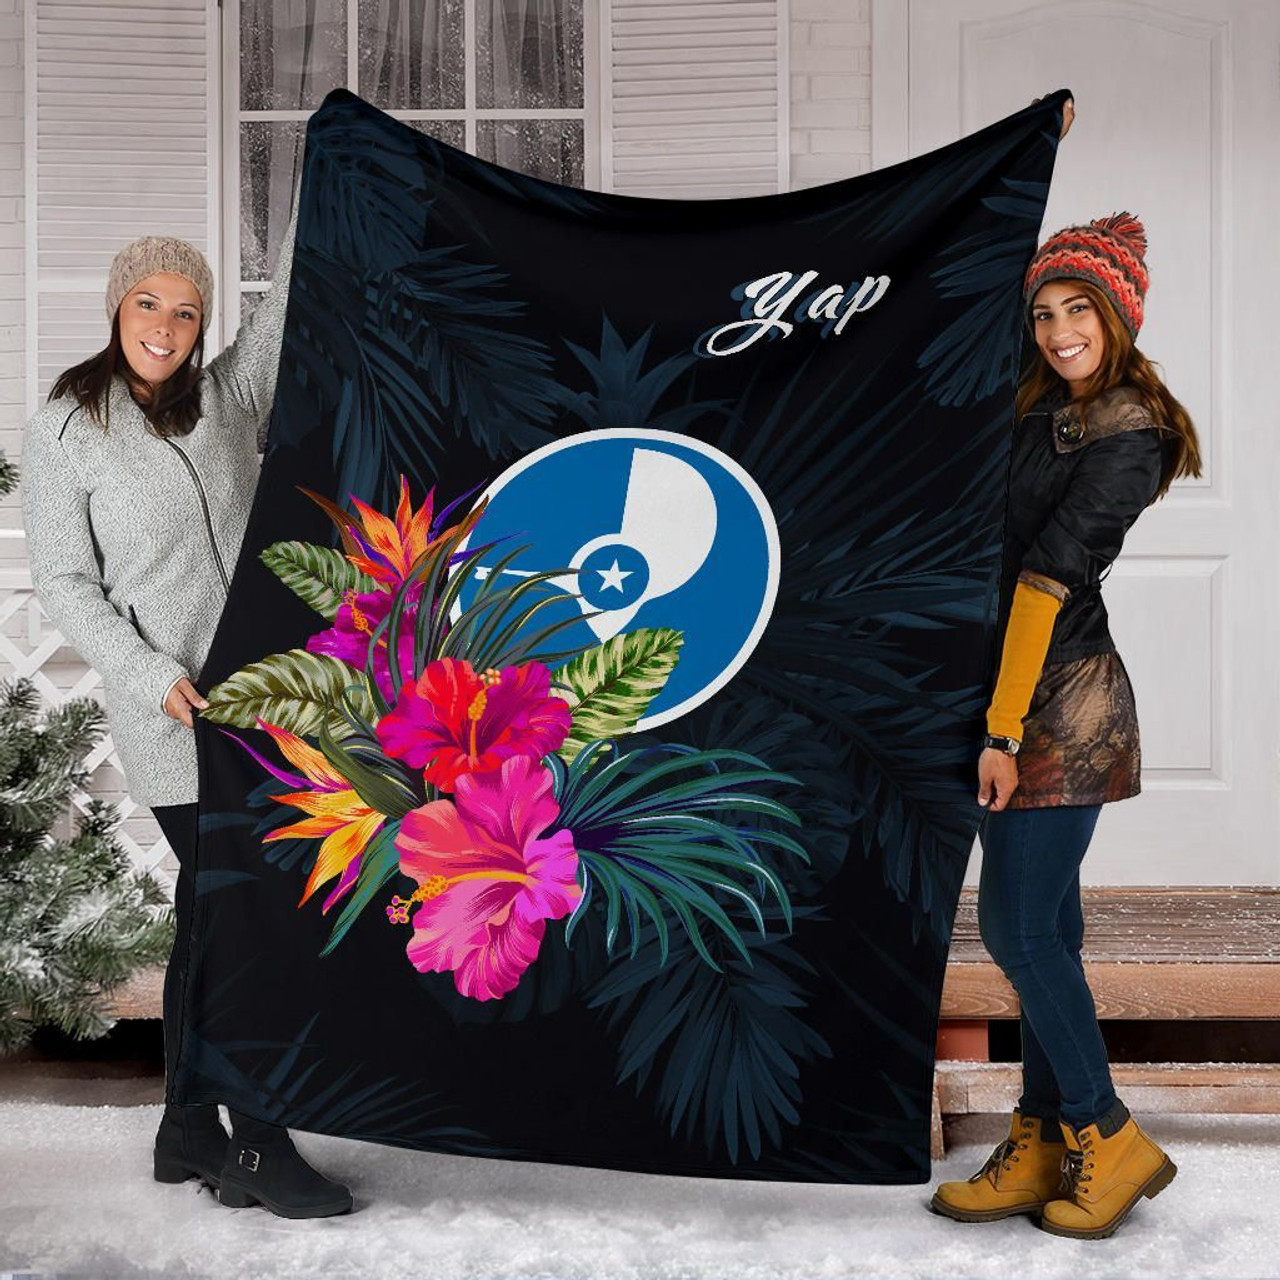 Yap Polynesian Premium Blanket - Tropical Flower 6